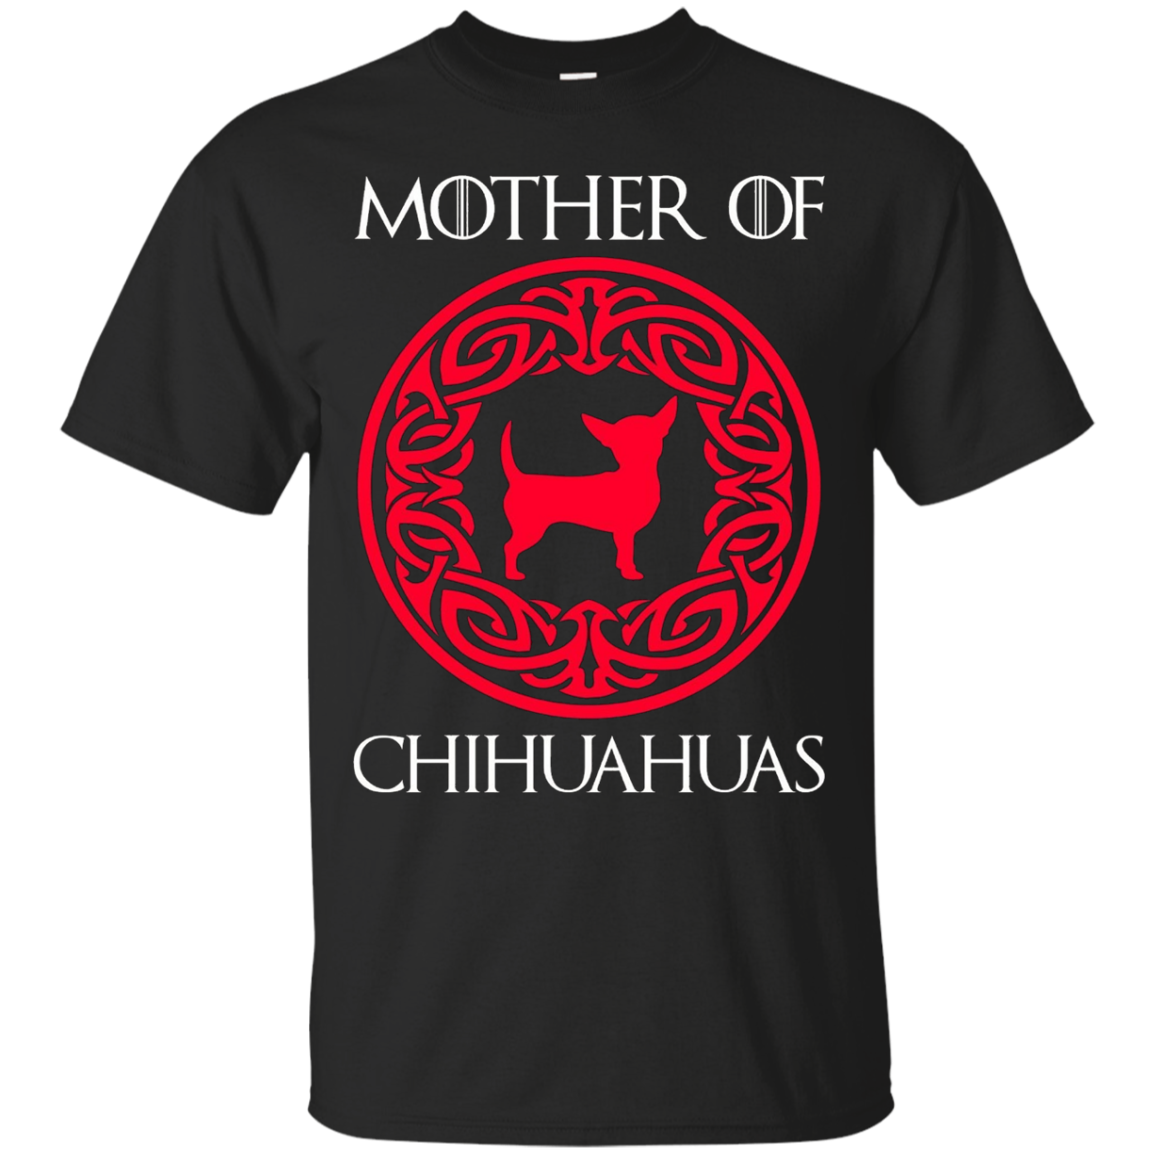 Mother Of Chihuahuas T-Shirt - Funny Chihuahua Lover Shirts